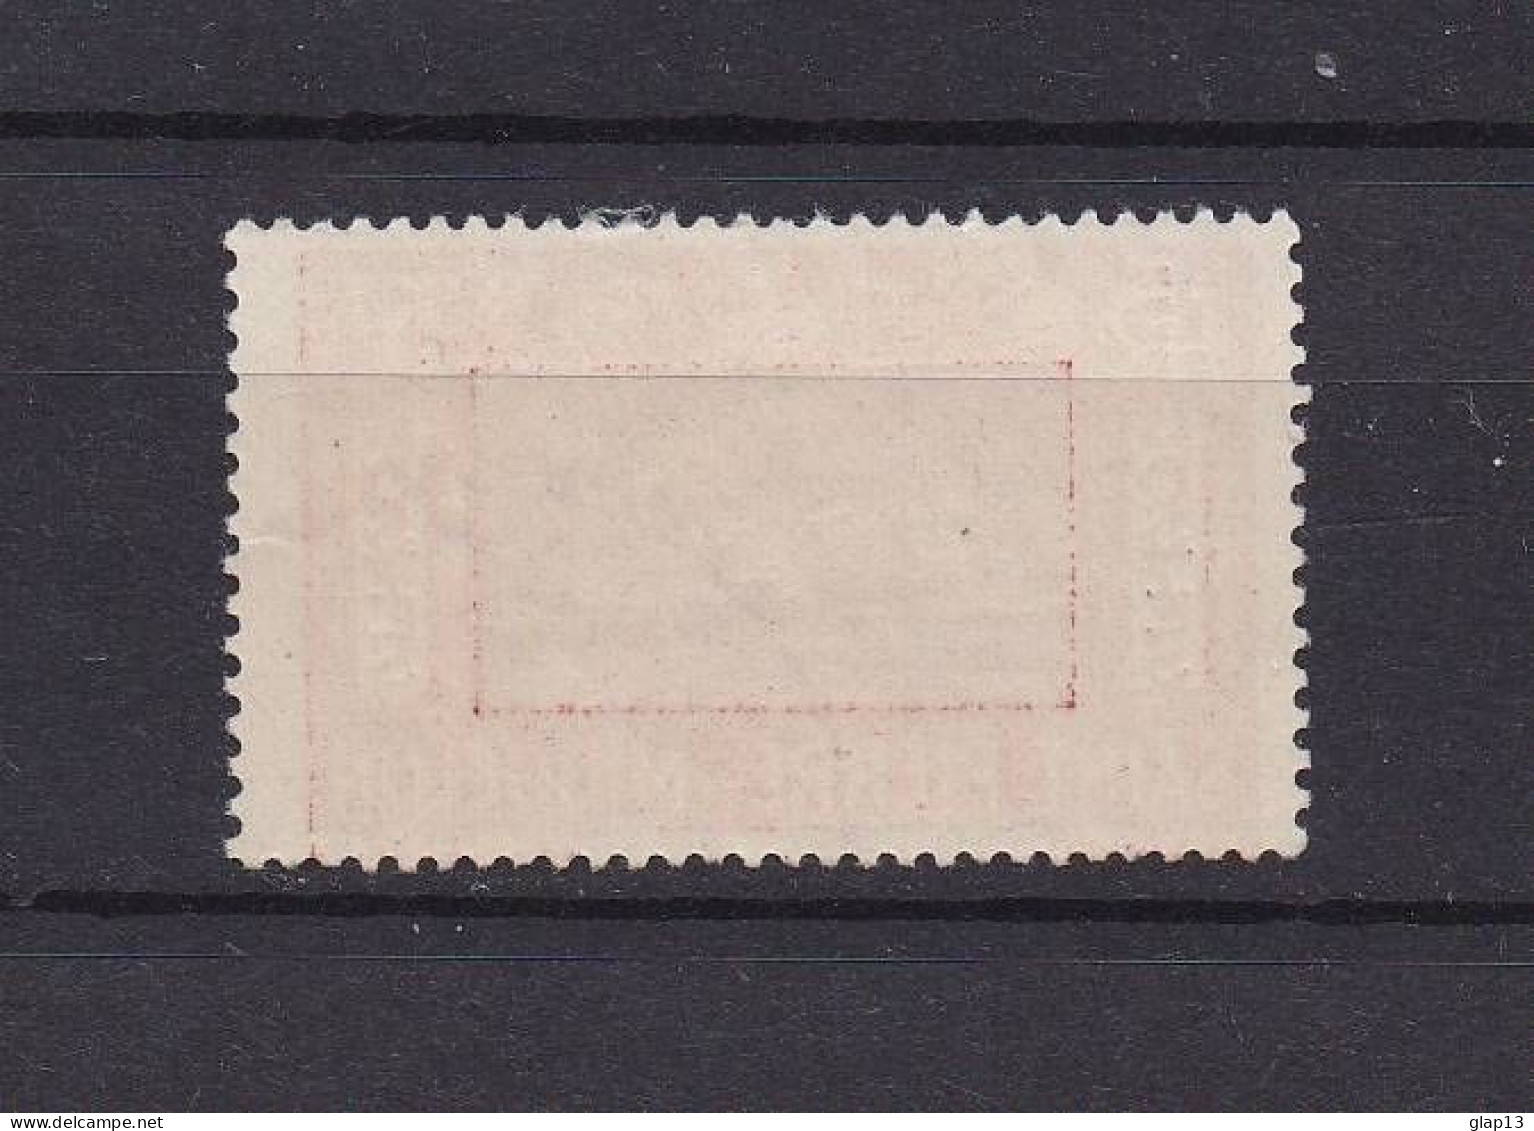 SAINT PIERRE ET MIQUELON 1932 TIMBRE N°157 OBLITERE PHARE - Used Stamps